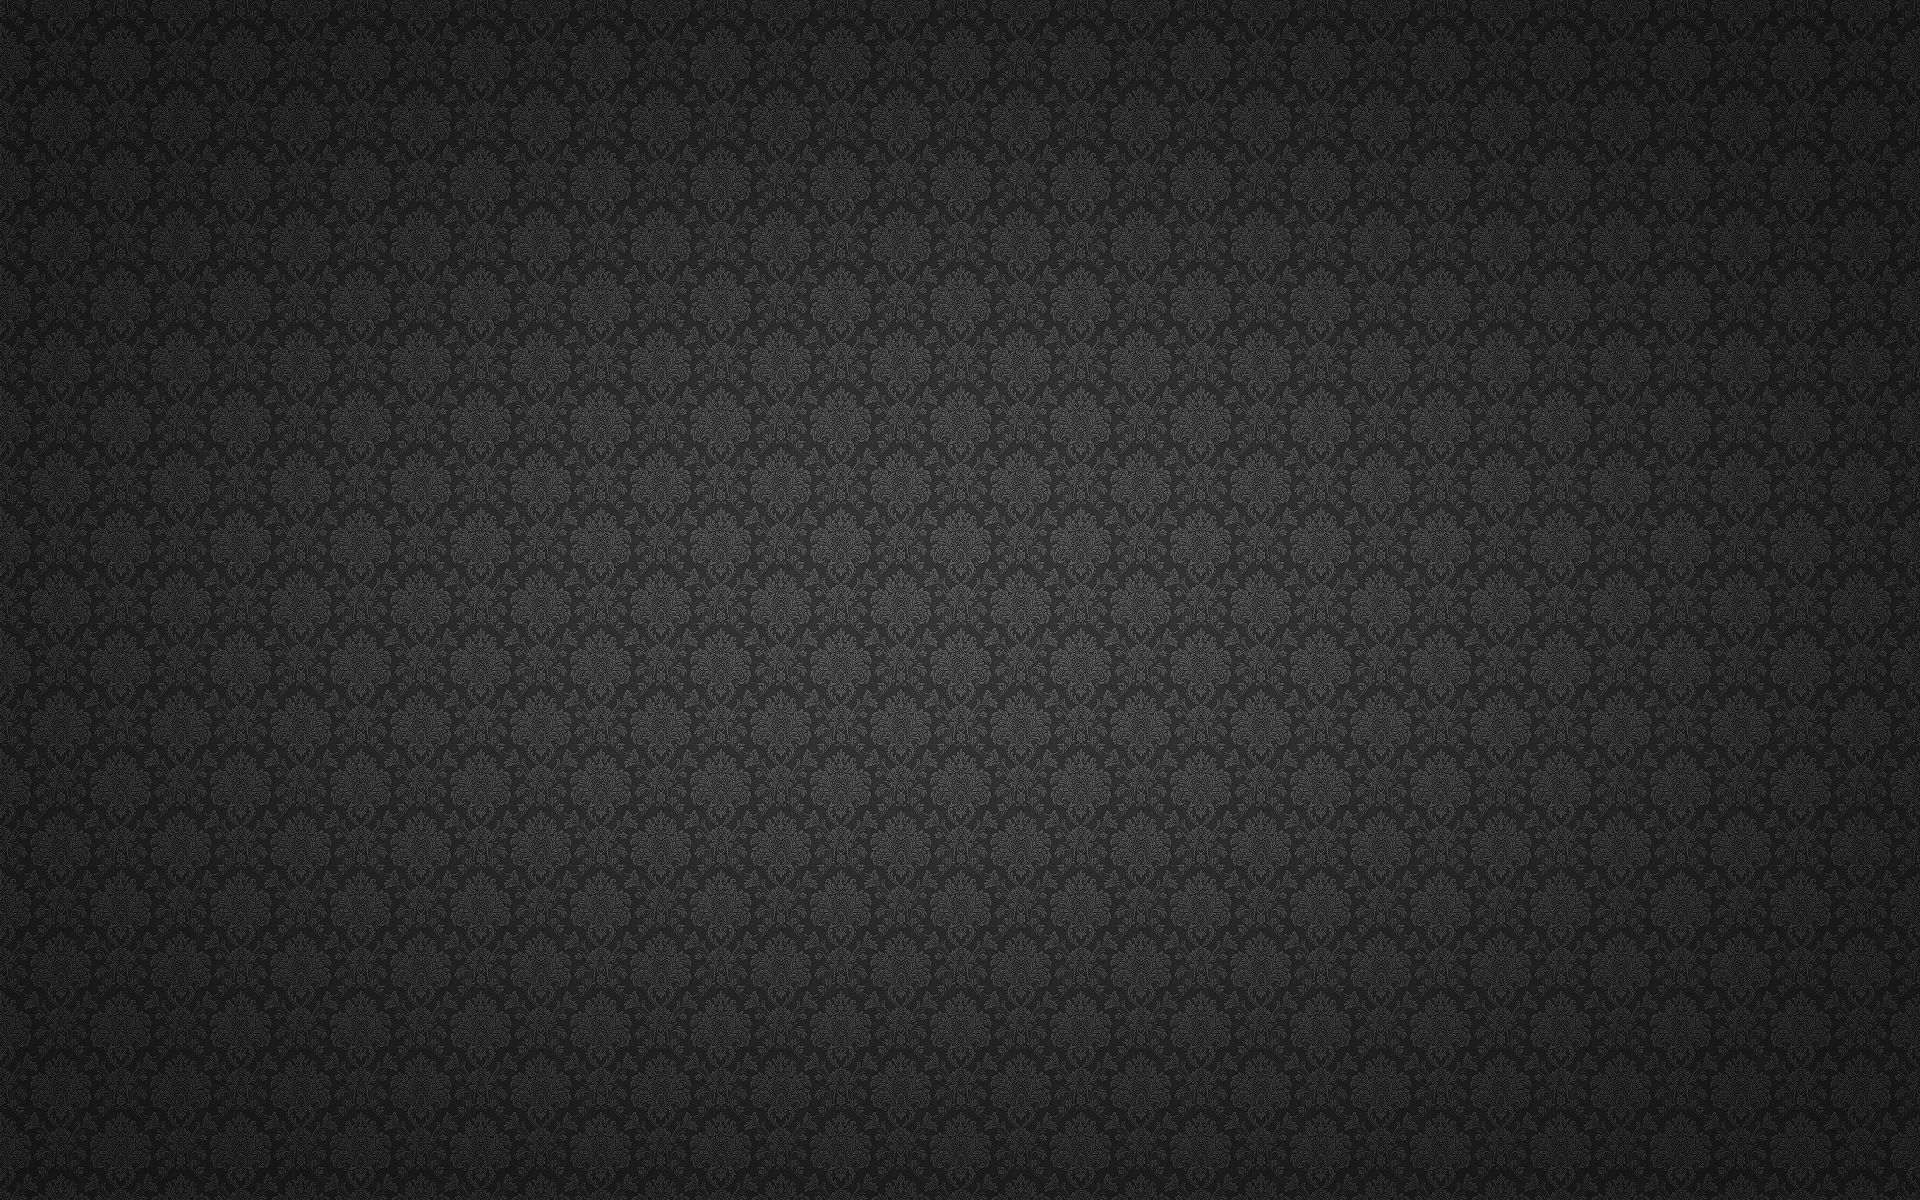 30 HD Black Backgrounds